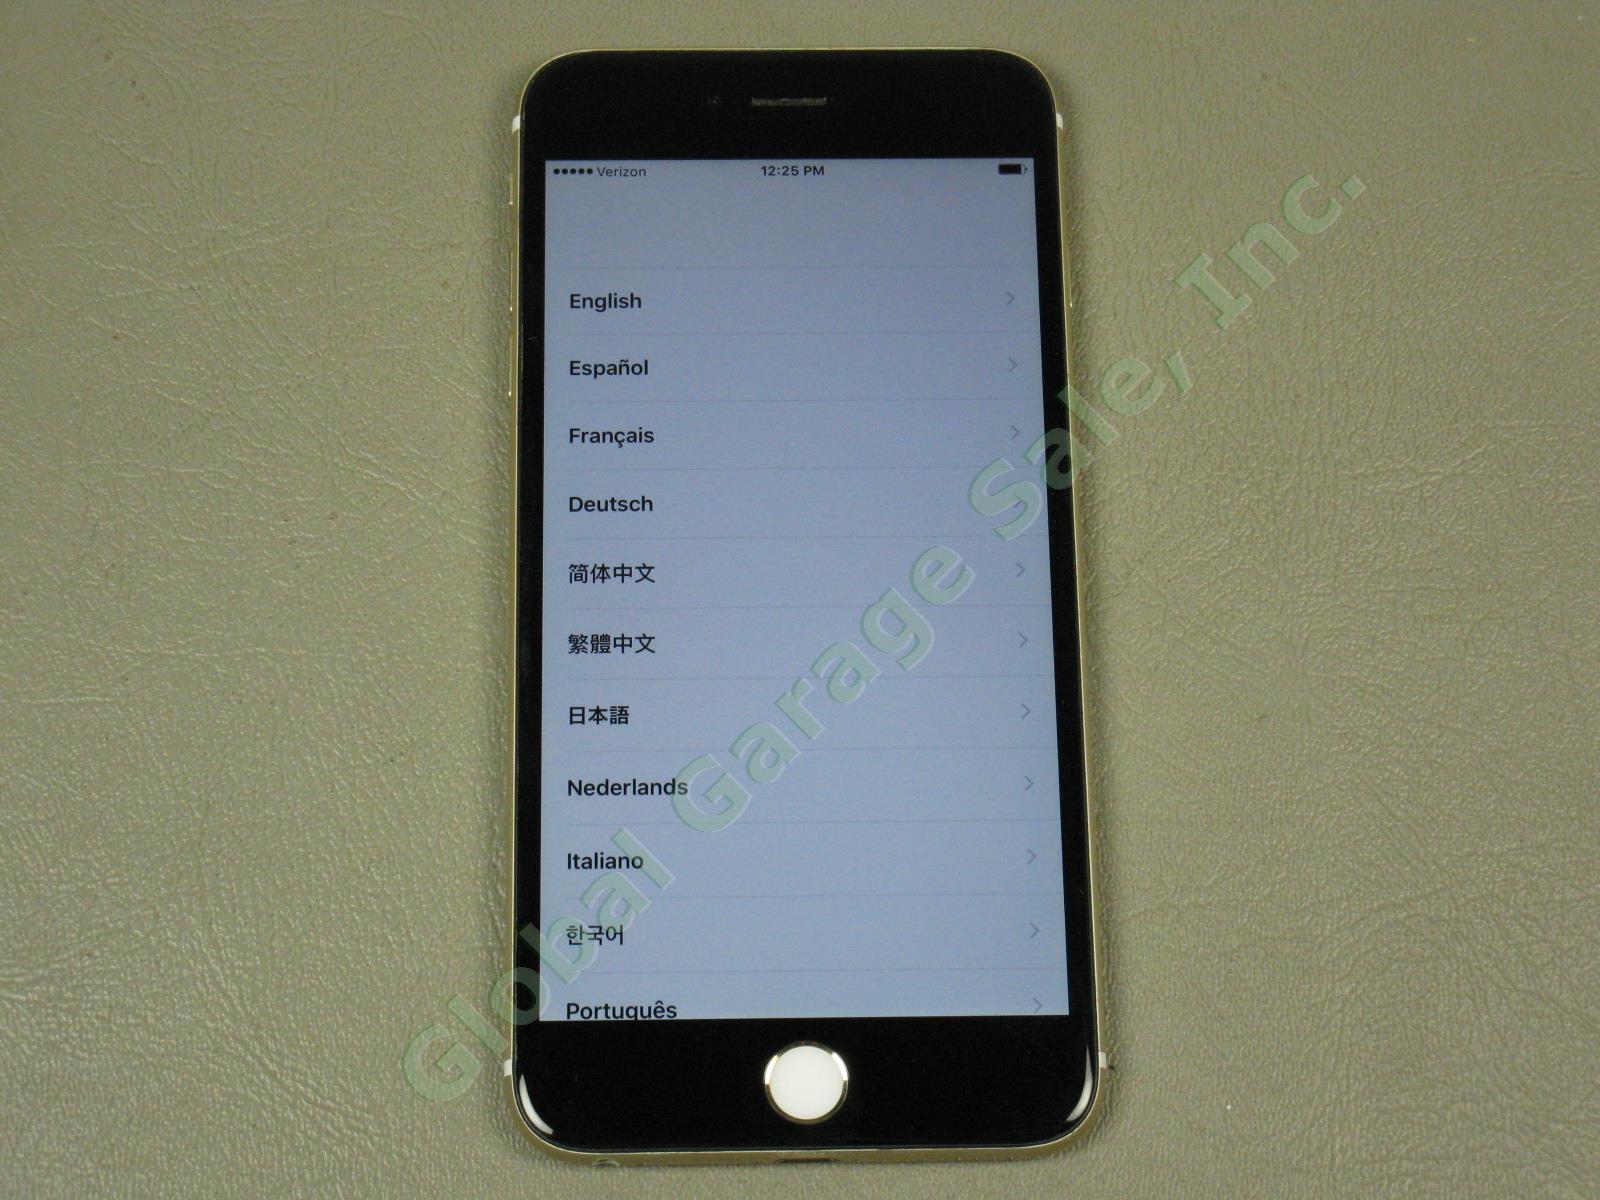 Apple iPhone 6 Plus Black 128GB A1522 MGCQ2LL/A Verizon Works Great No Reserve! 2